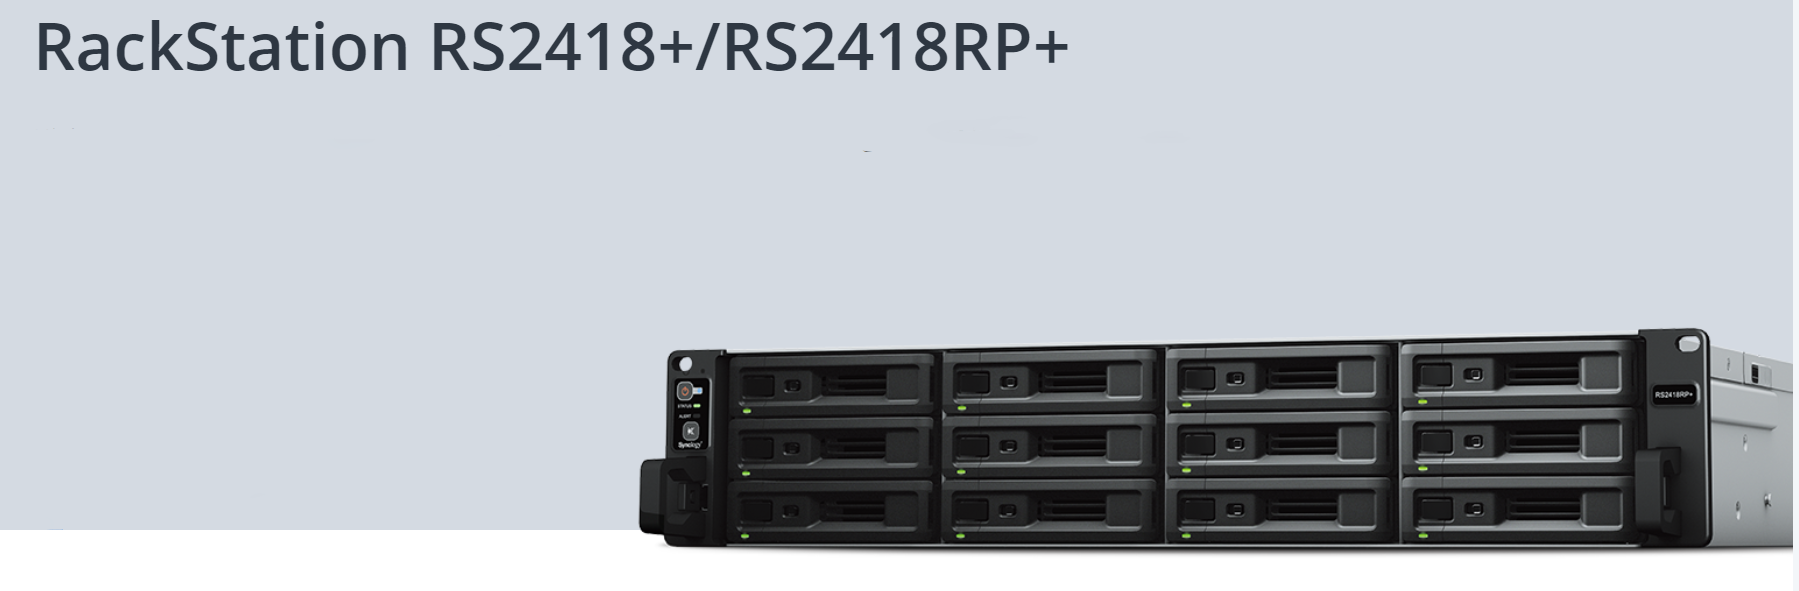 RackStation RS2418